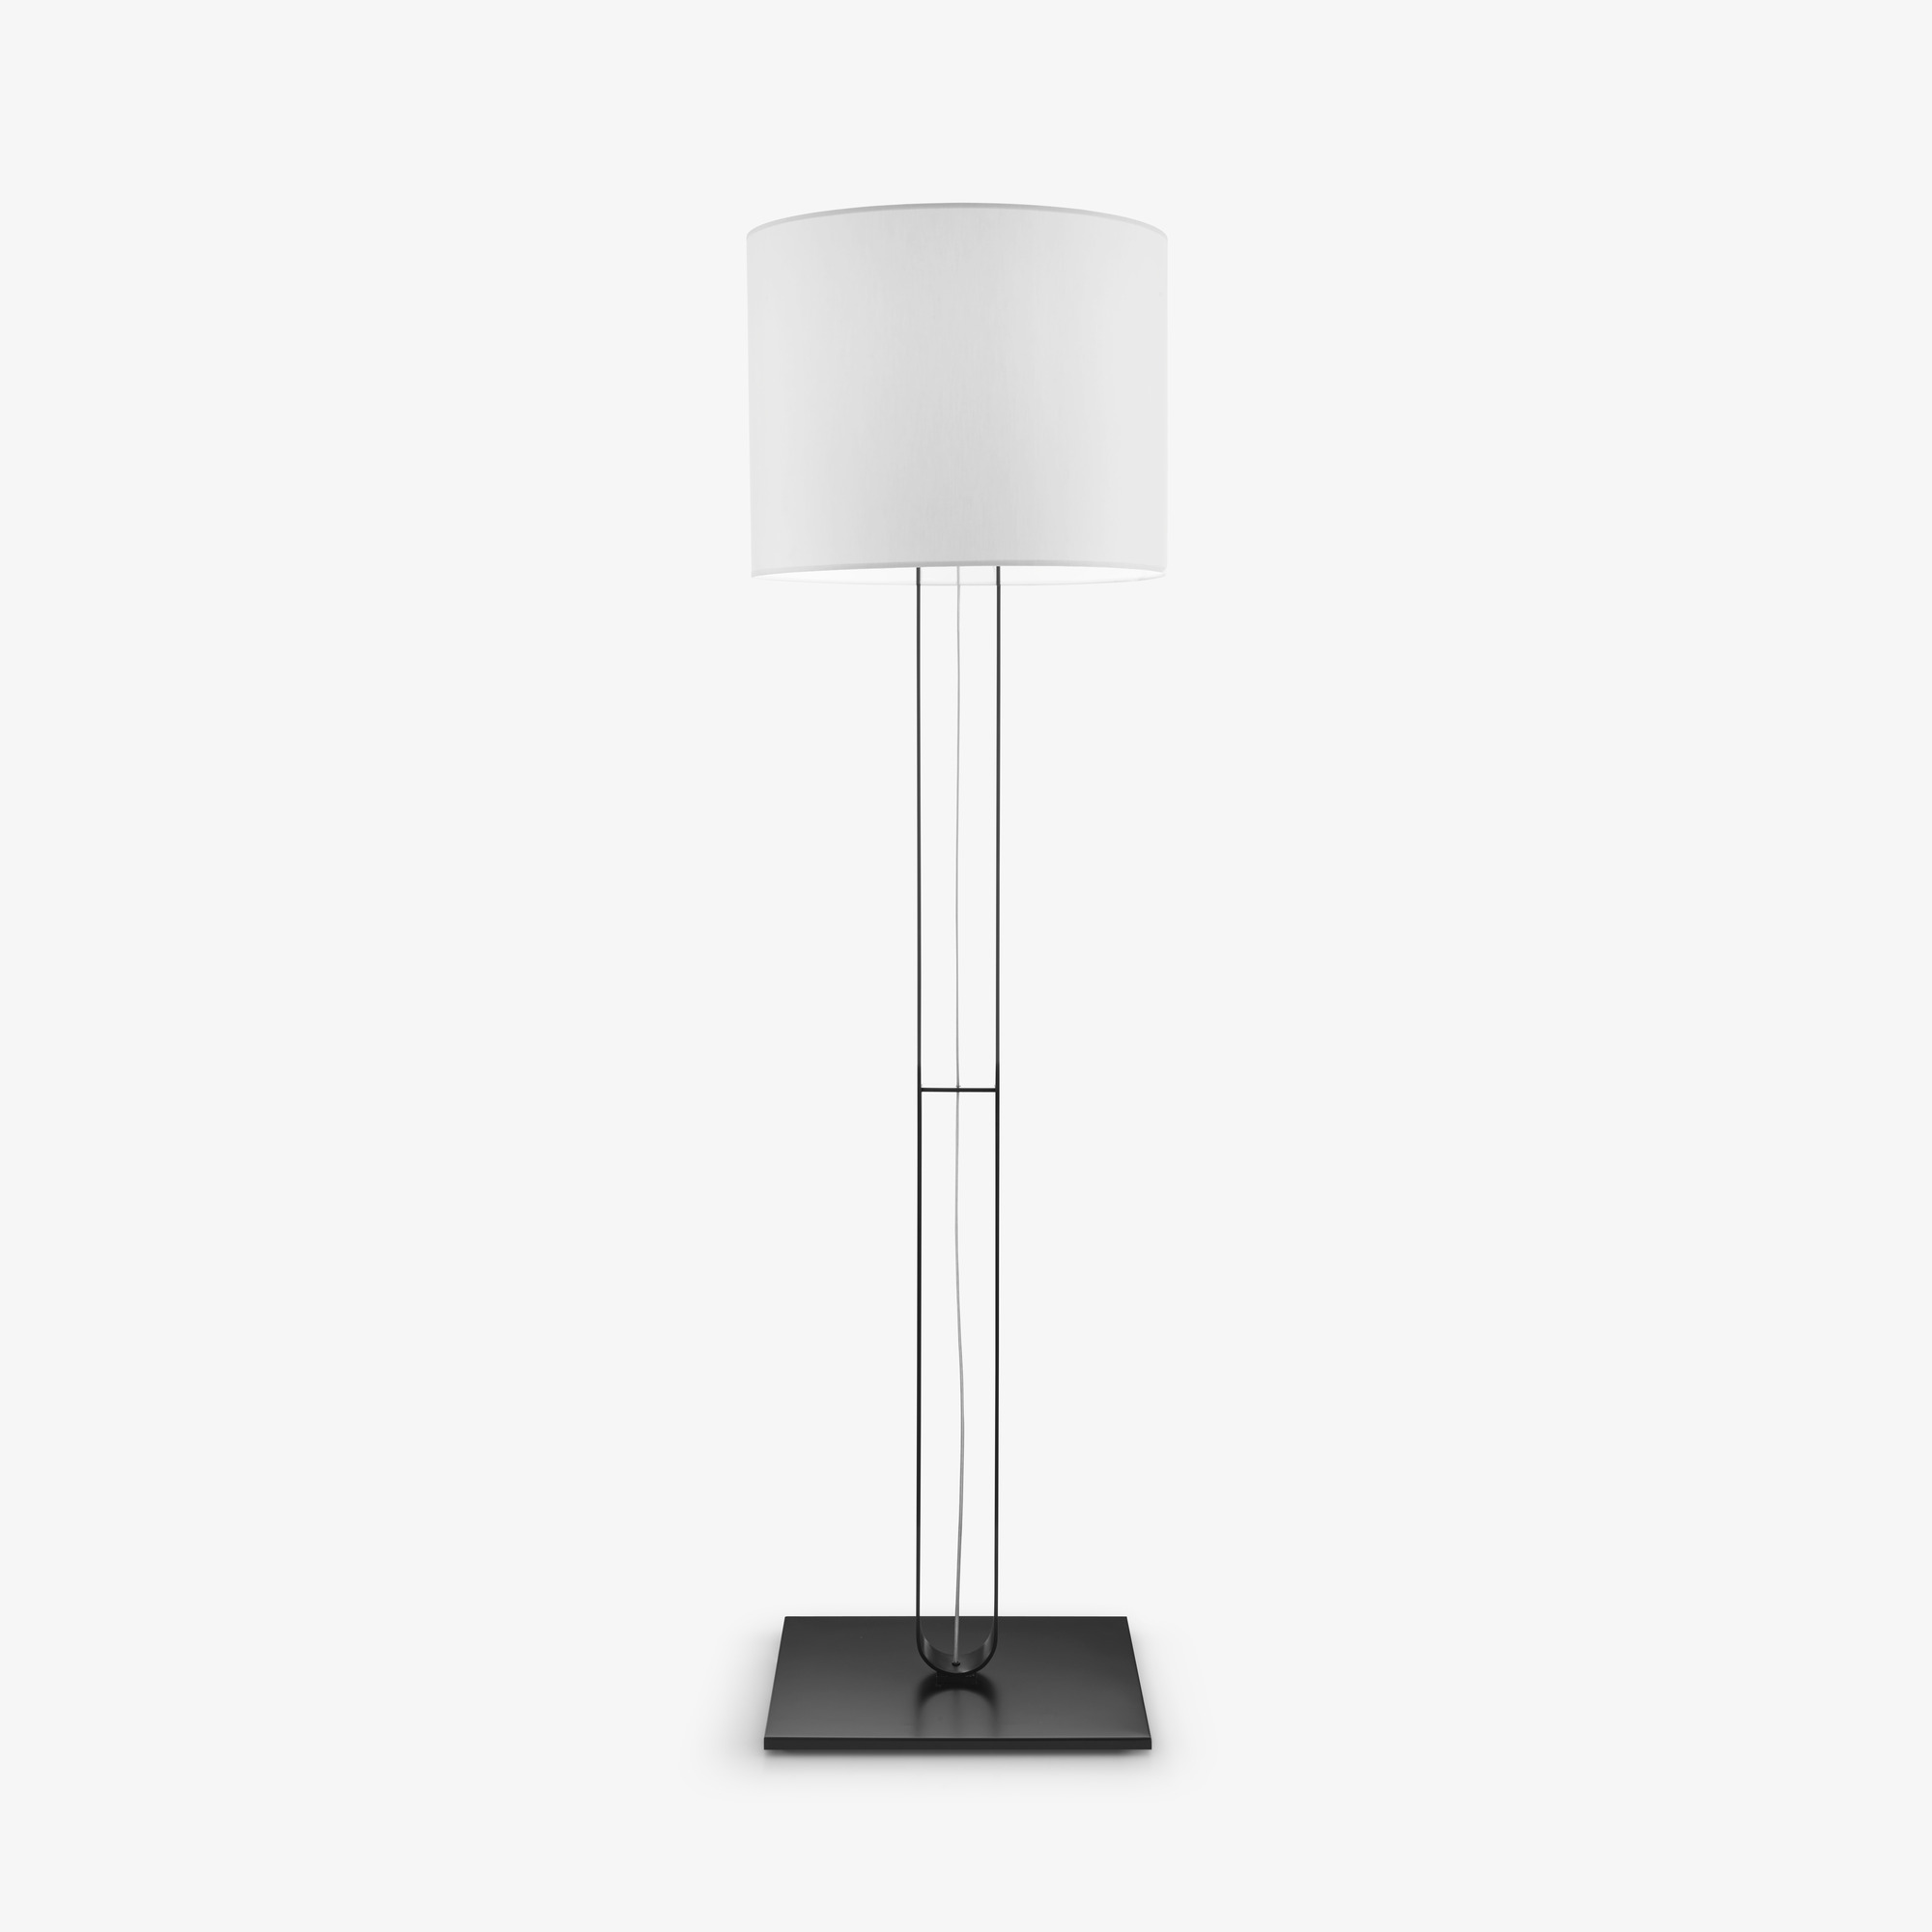 Image Floor standard lamp   1